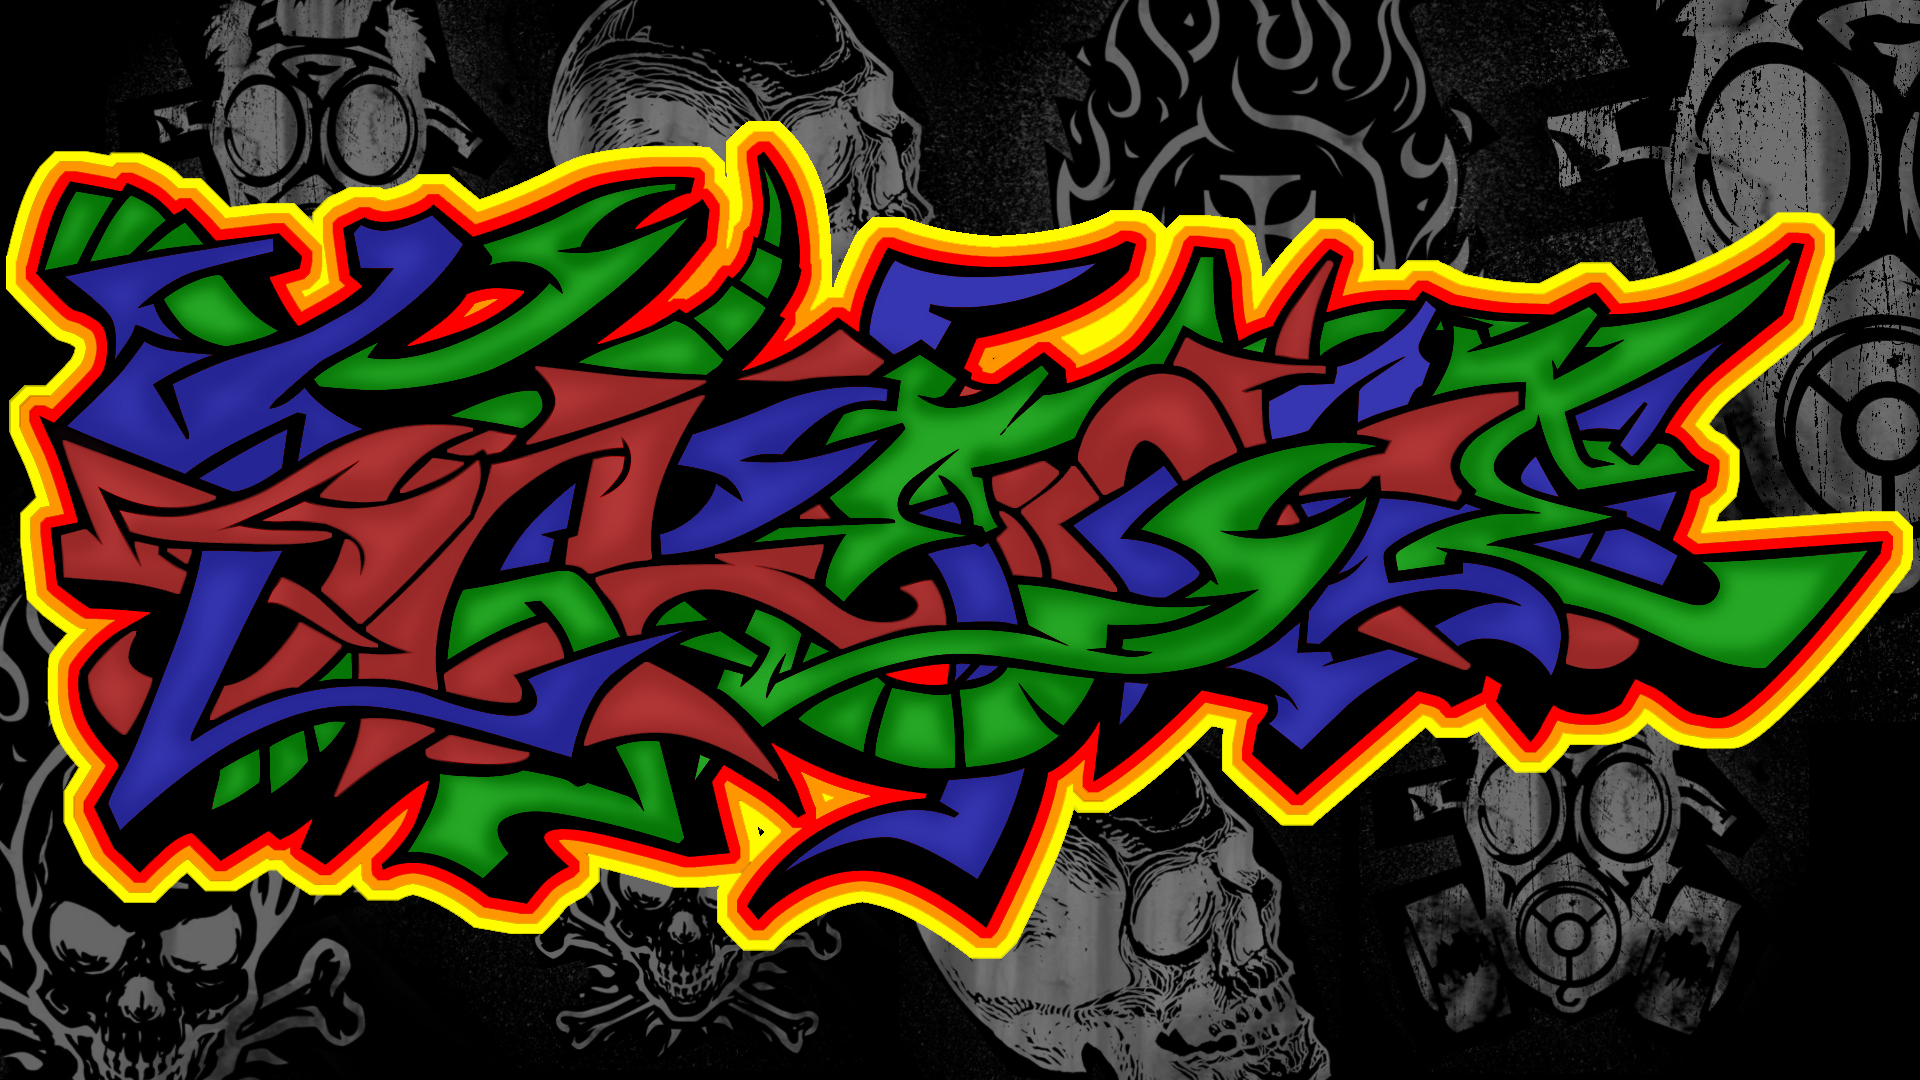 Graffiti Wallpapers 1080p   HD Wallpapers bigbackgroundcom